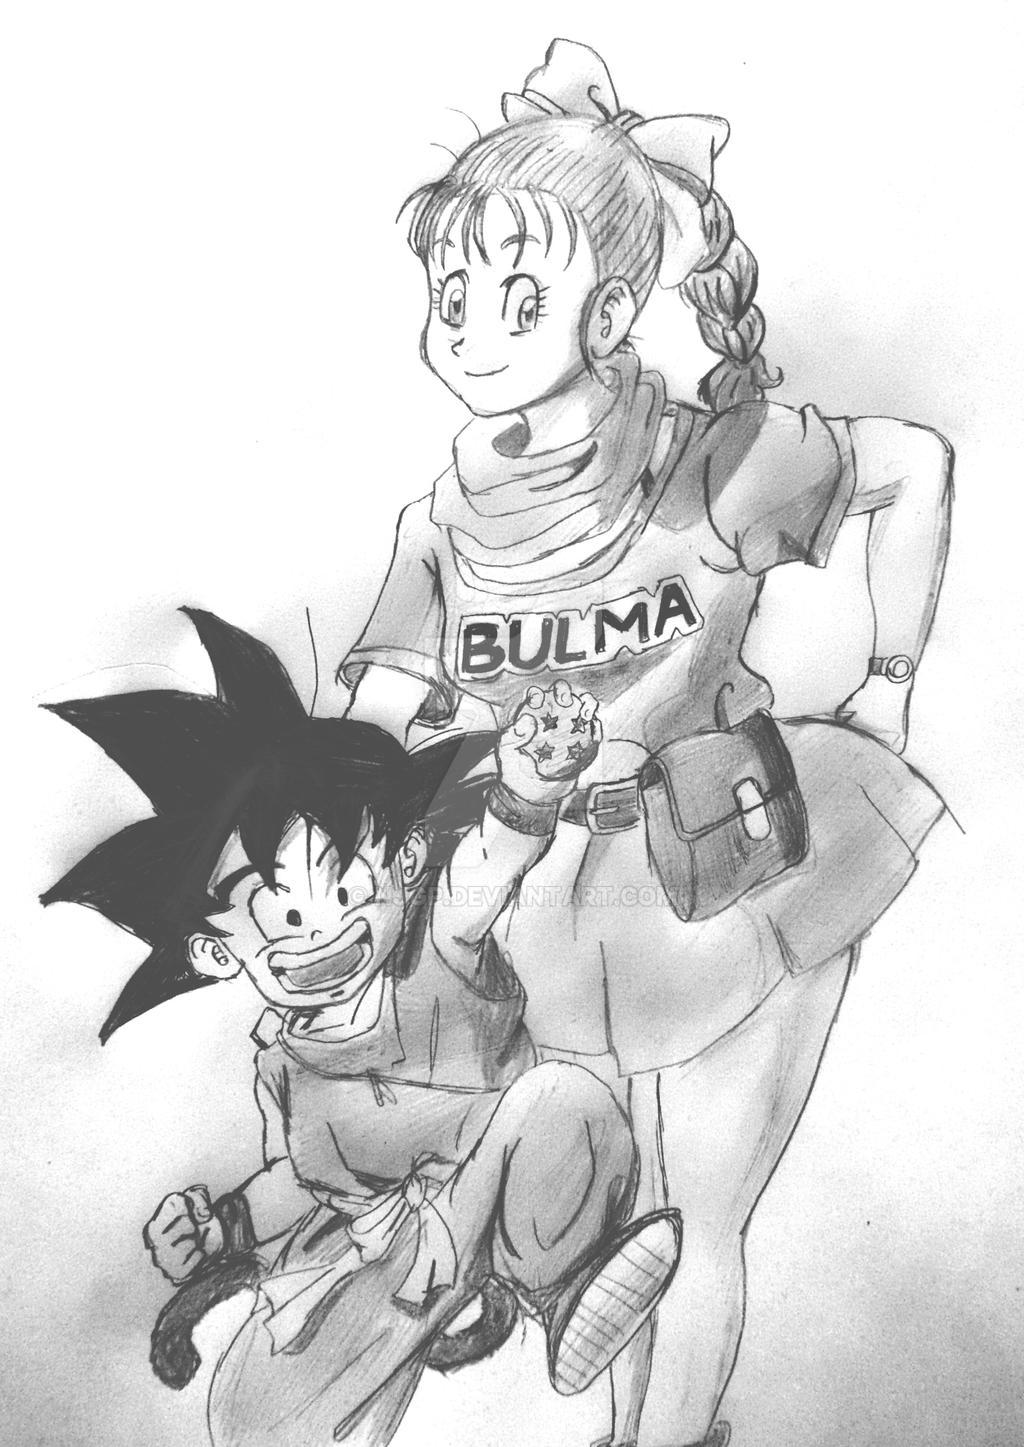 Goku and Bulma by njgp on DeviantArt